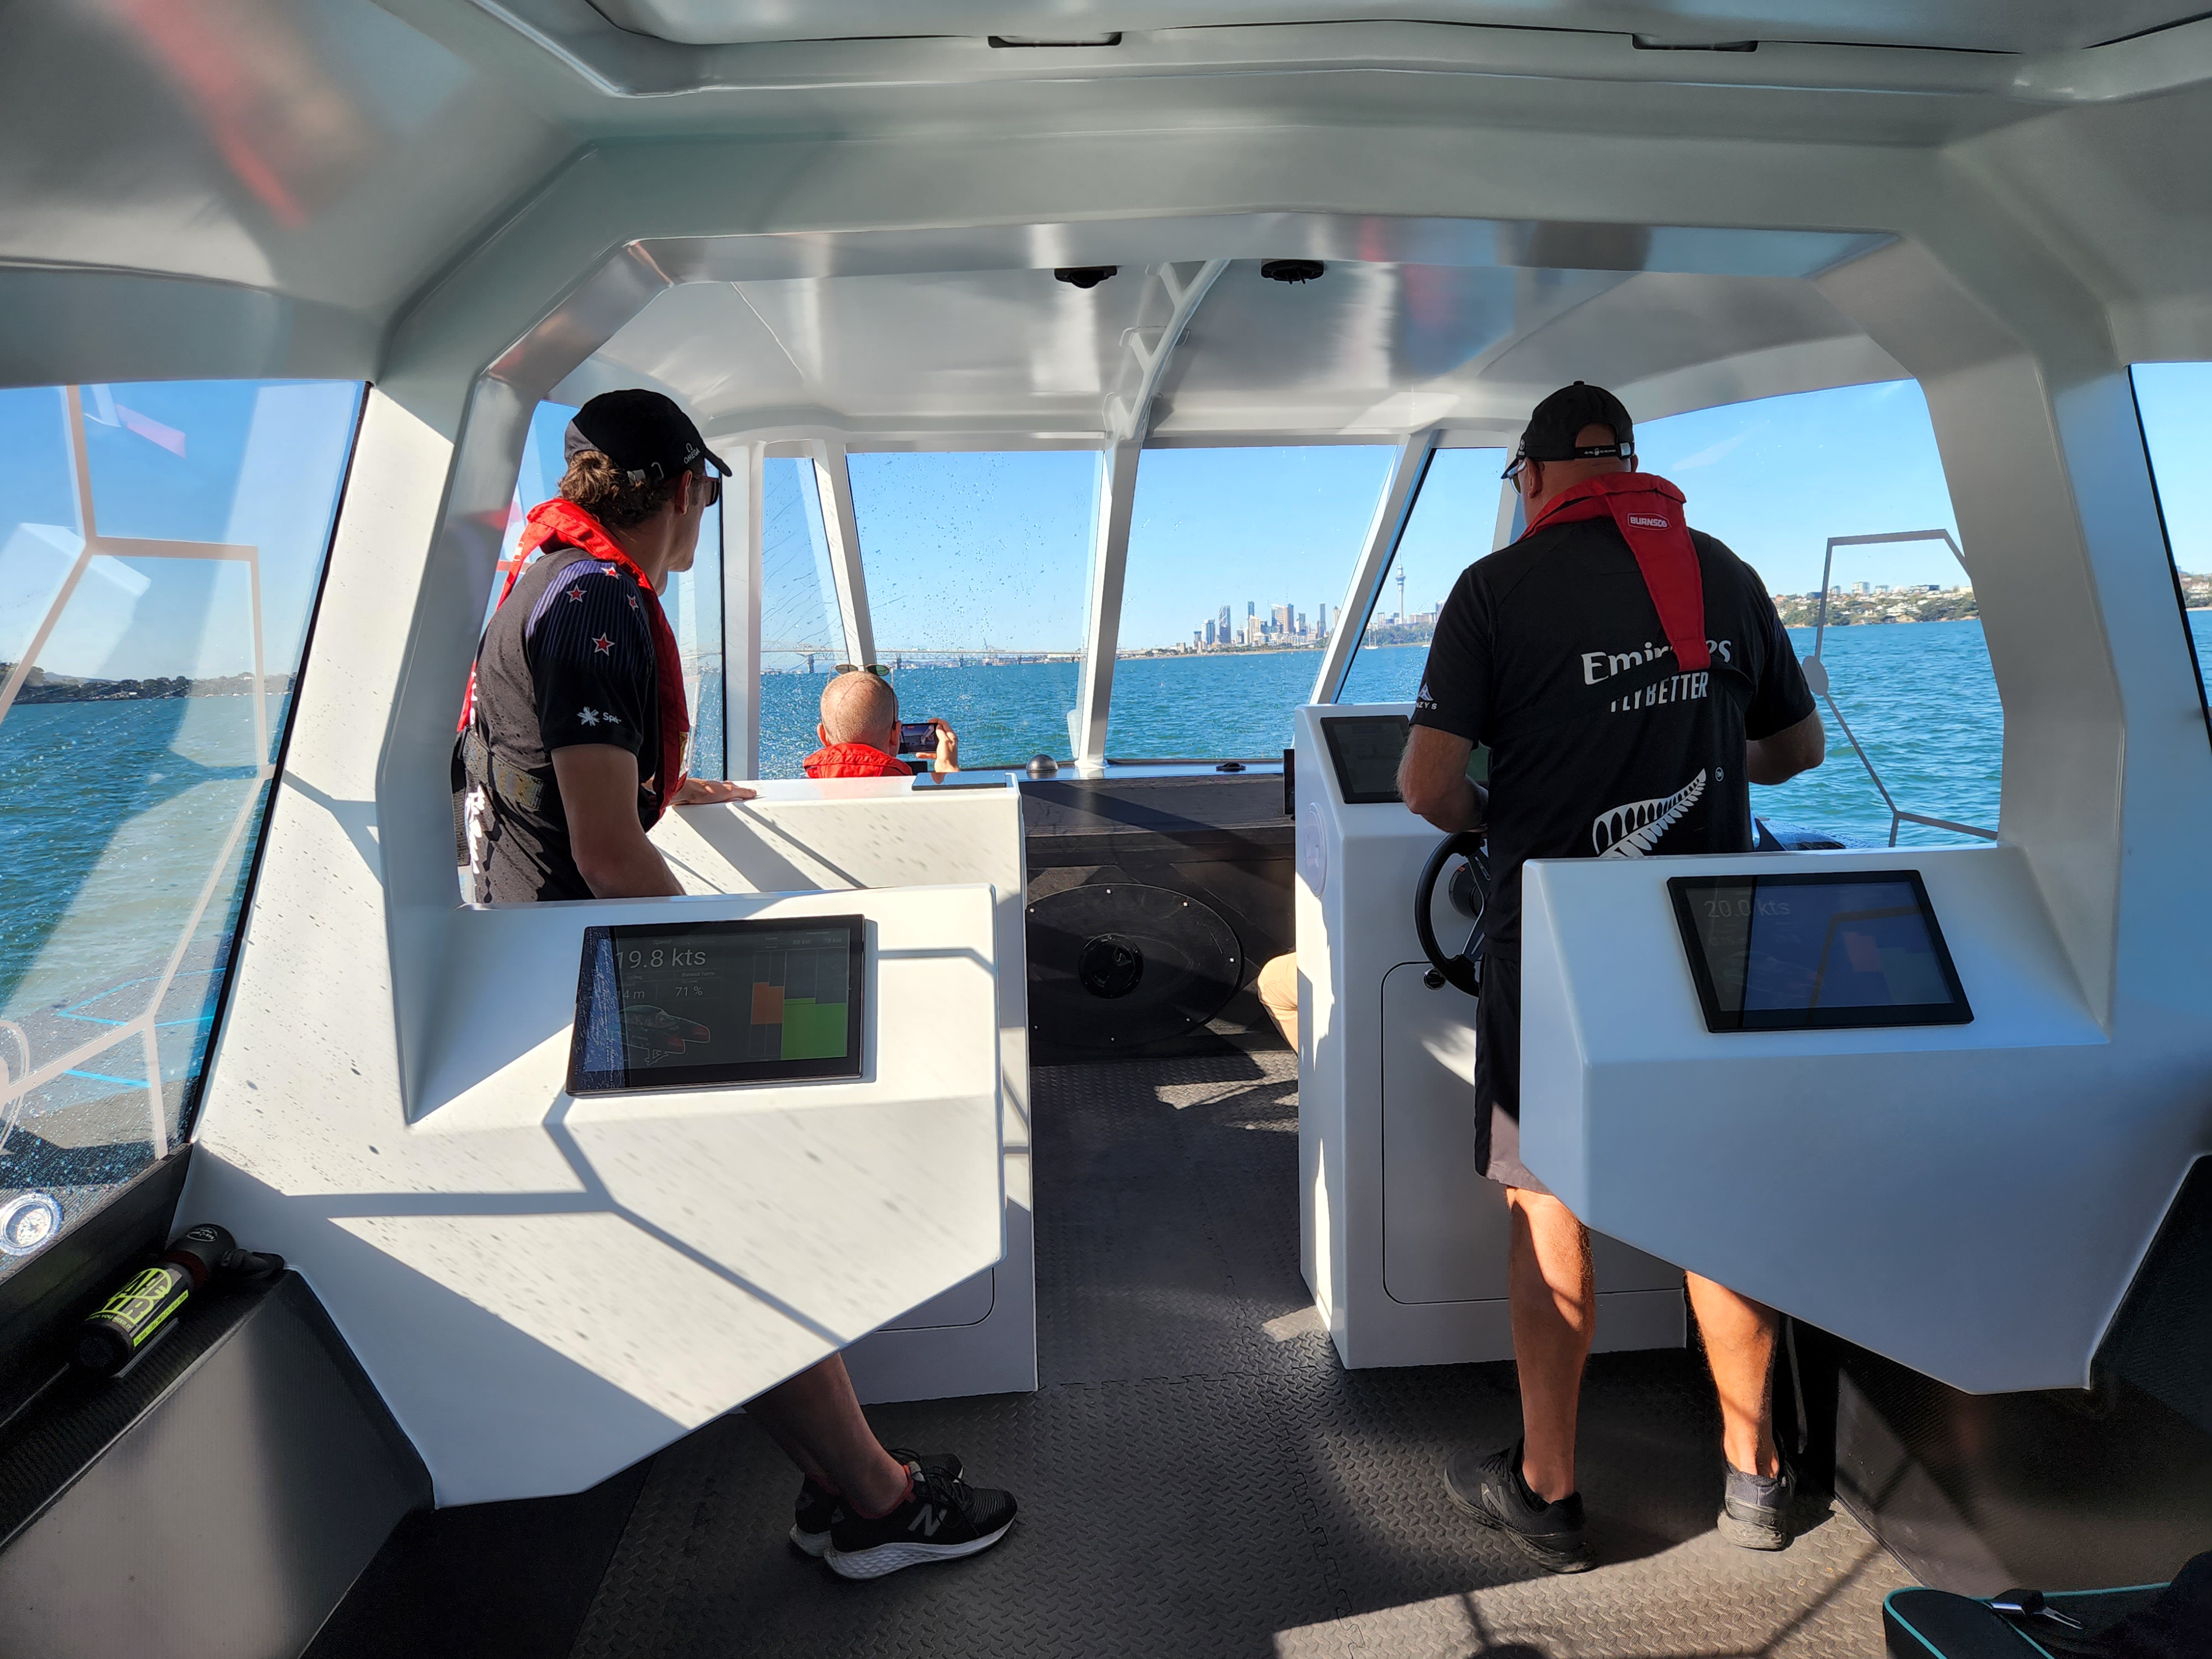 Chase Zero, Team New Zealand chase boat, hydrogen power